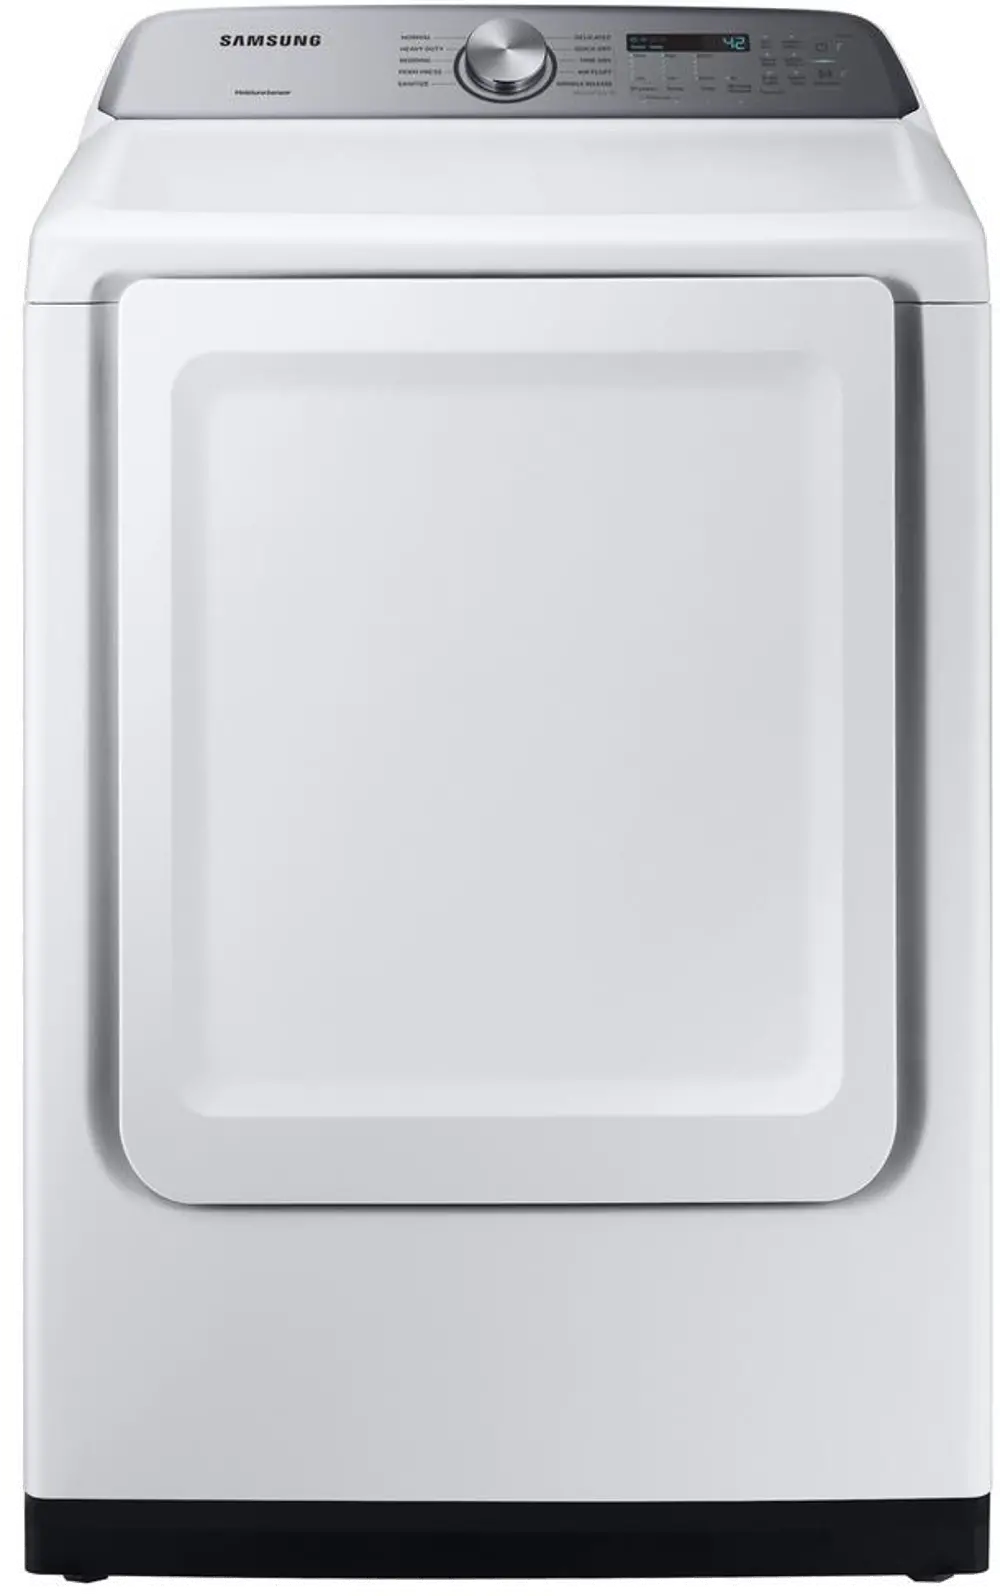 DVE50R5200W Samsung Sensor Dry Electric Dryer - 7.4 cu. ft. White-1